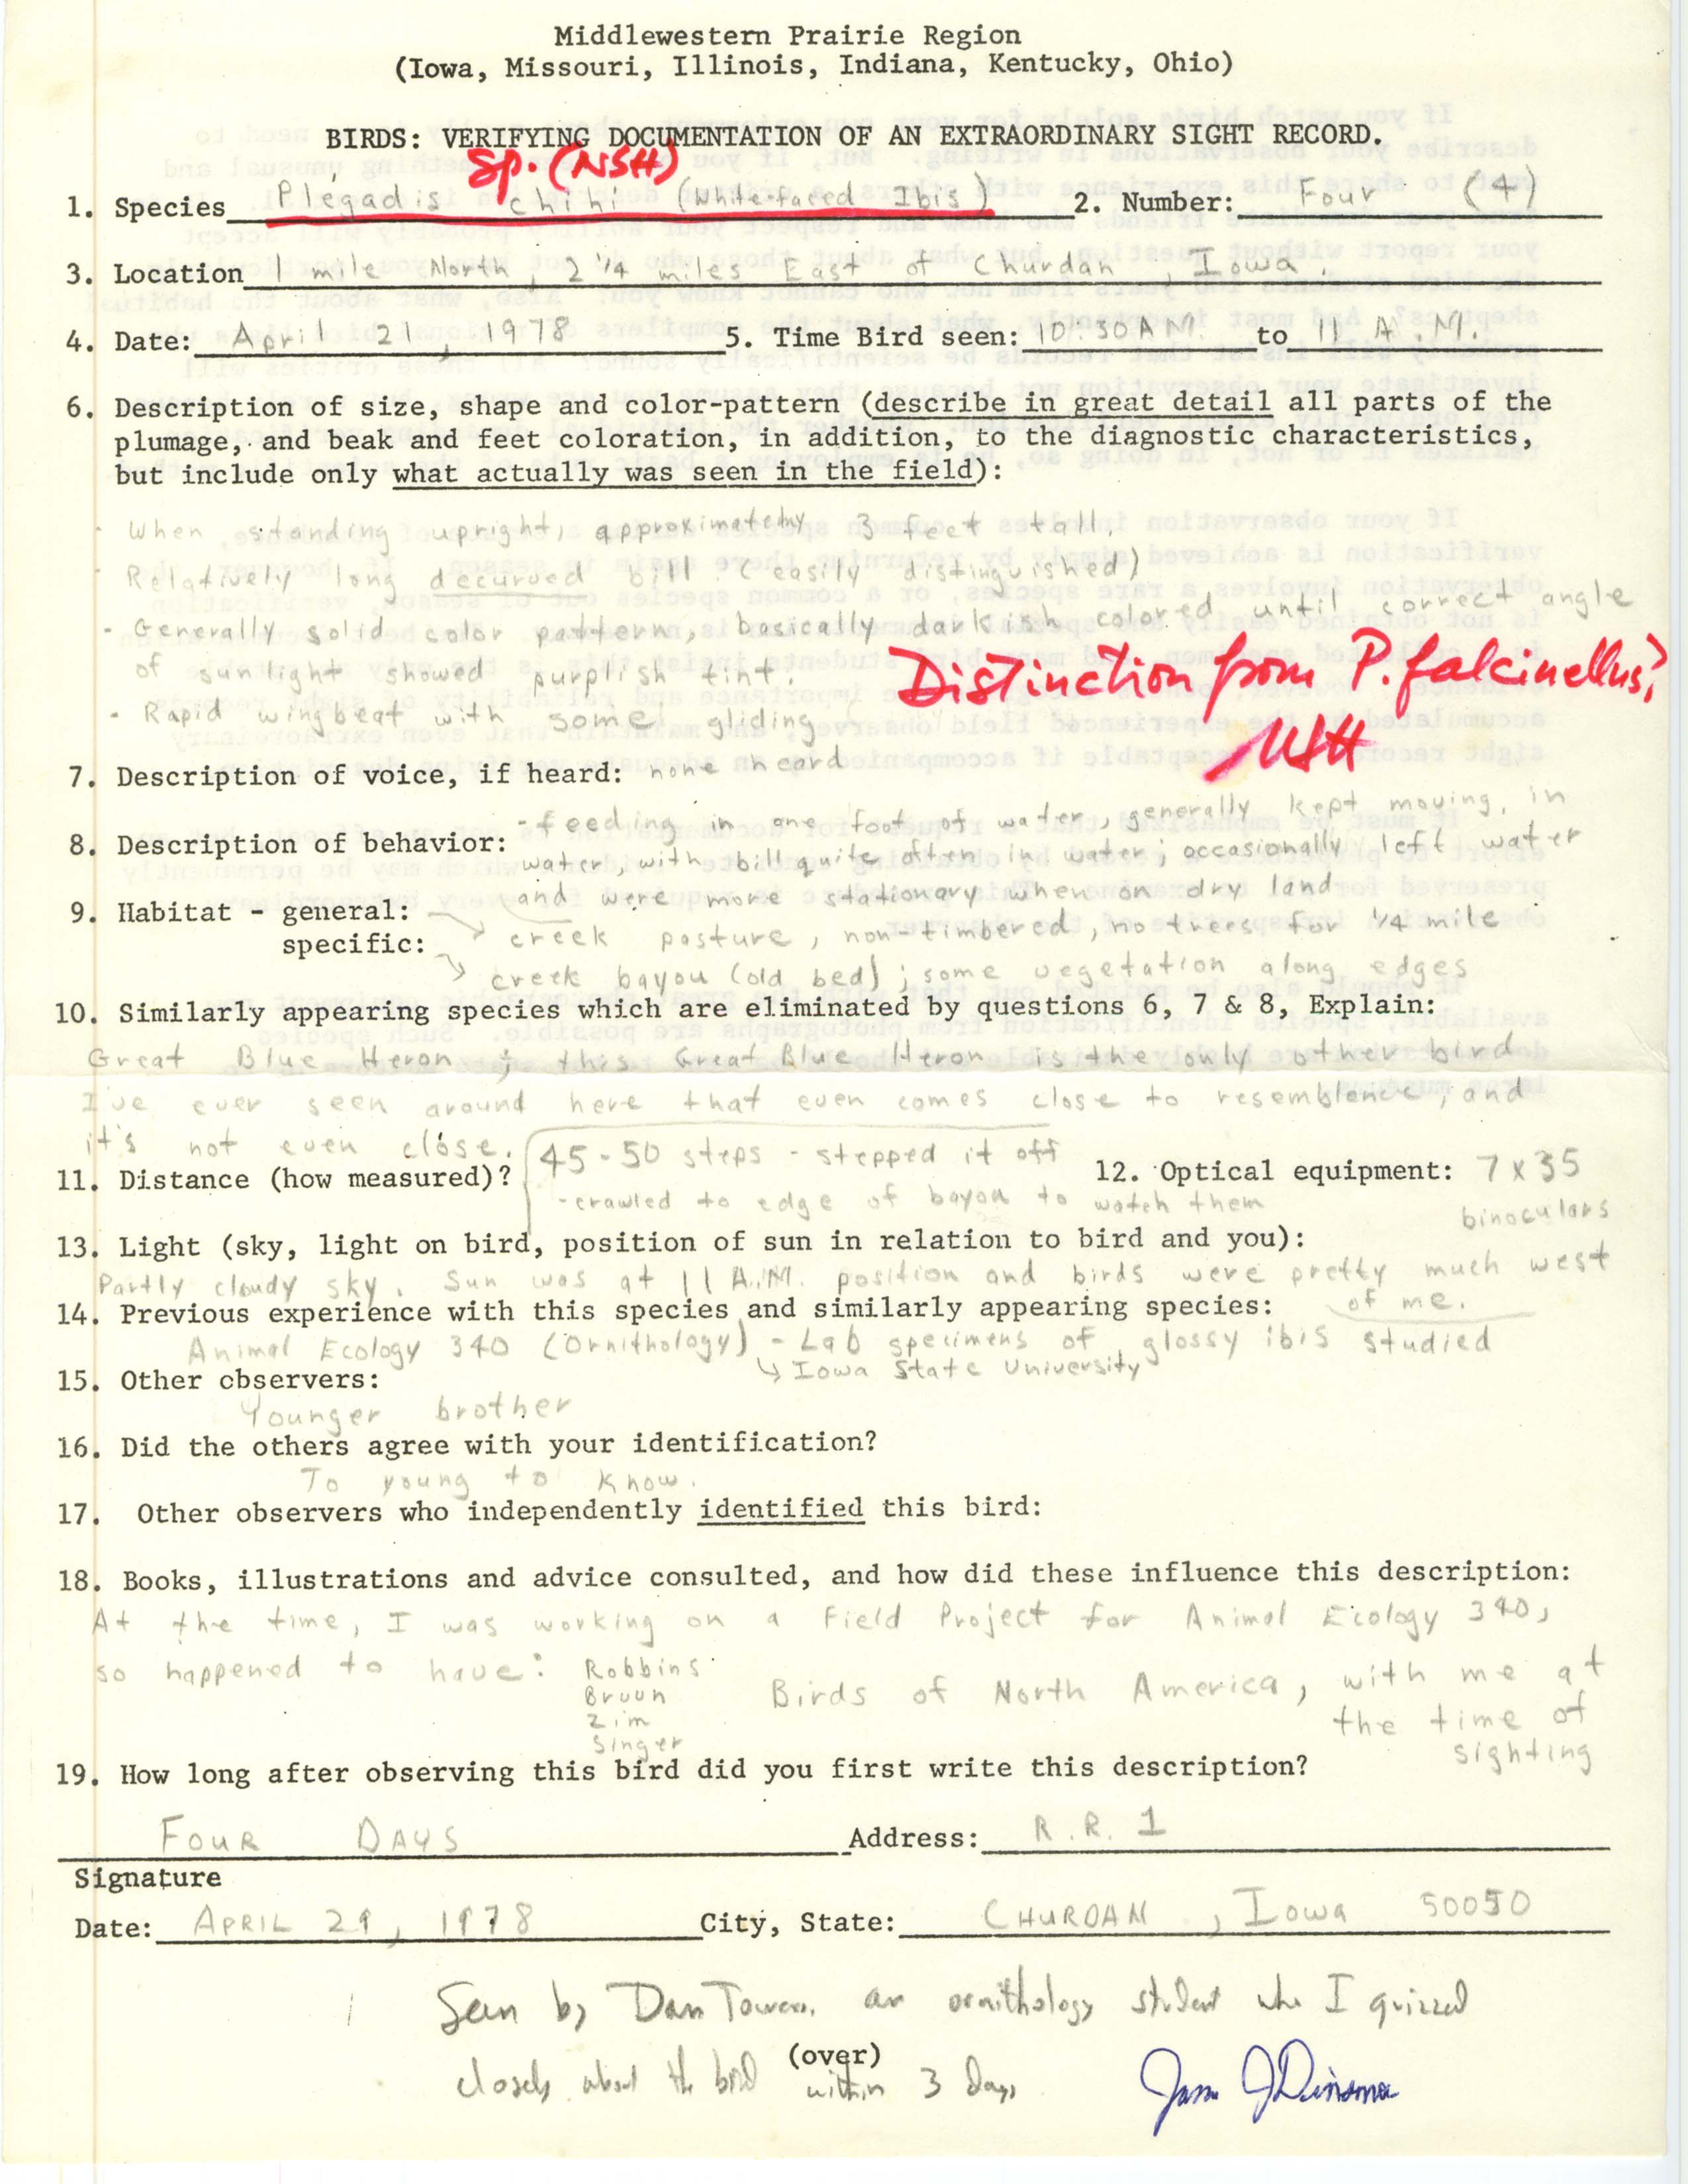 Rare bird documentation form for White-faced Ibis at Churdan, 1978